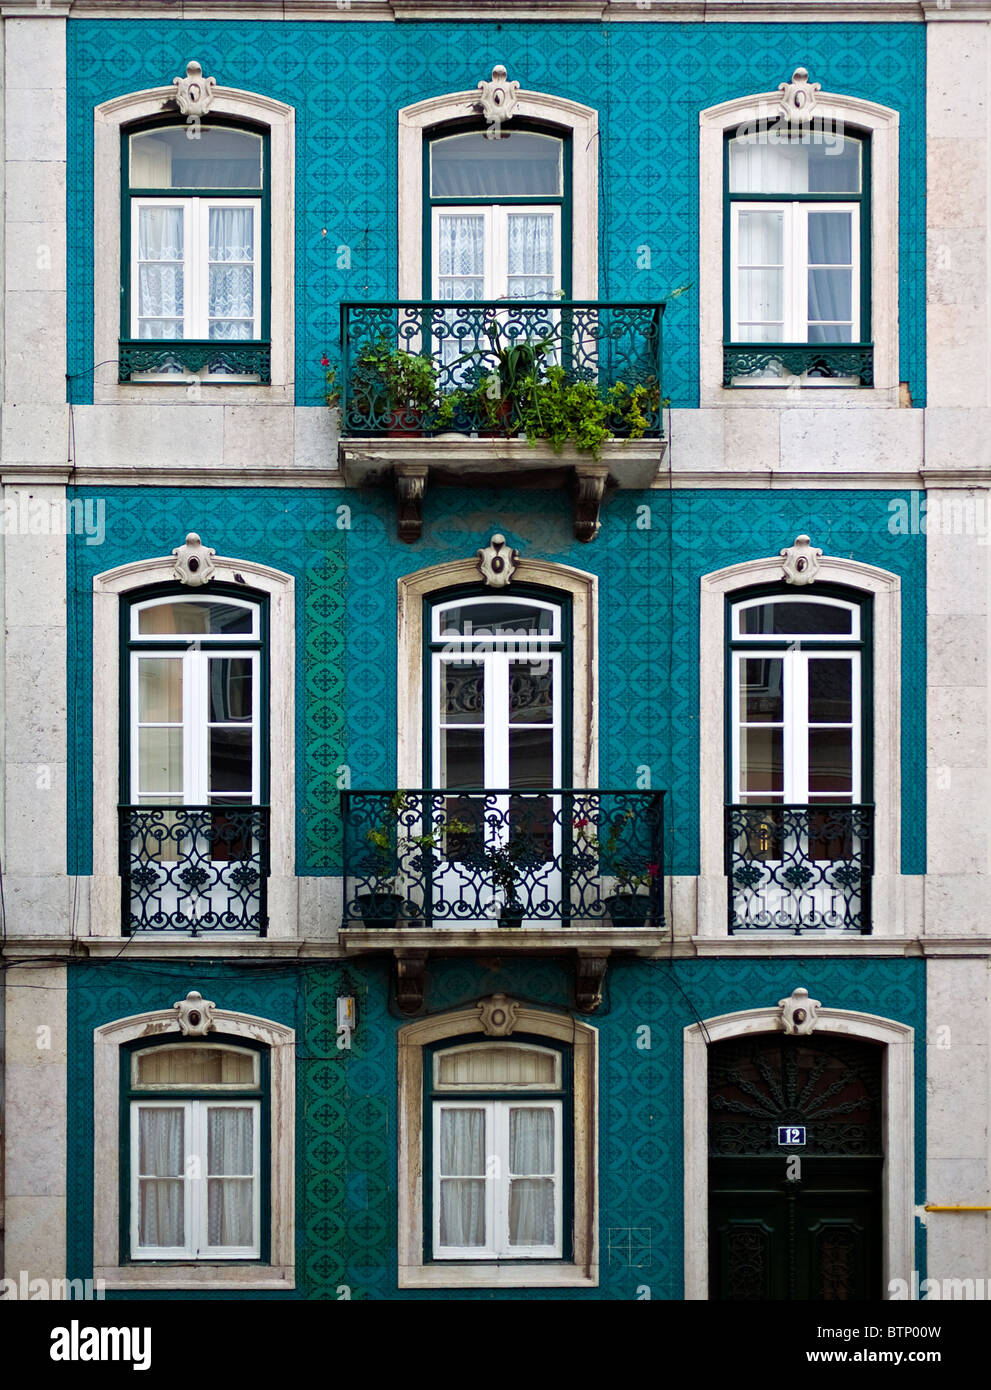 House with green tiles (azulejos), Lisbon, Portugal Stock Photo